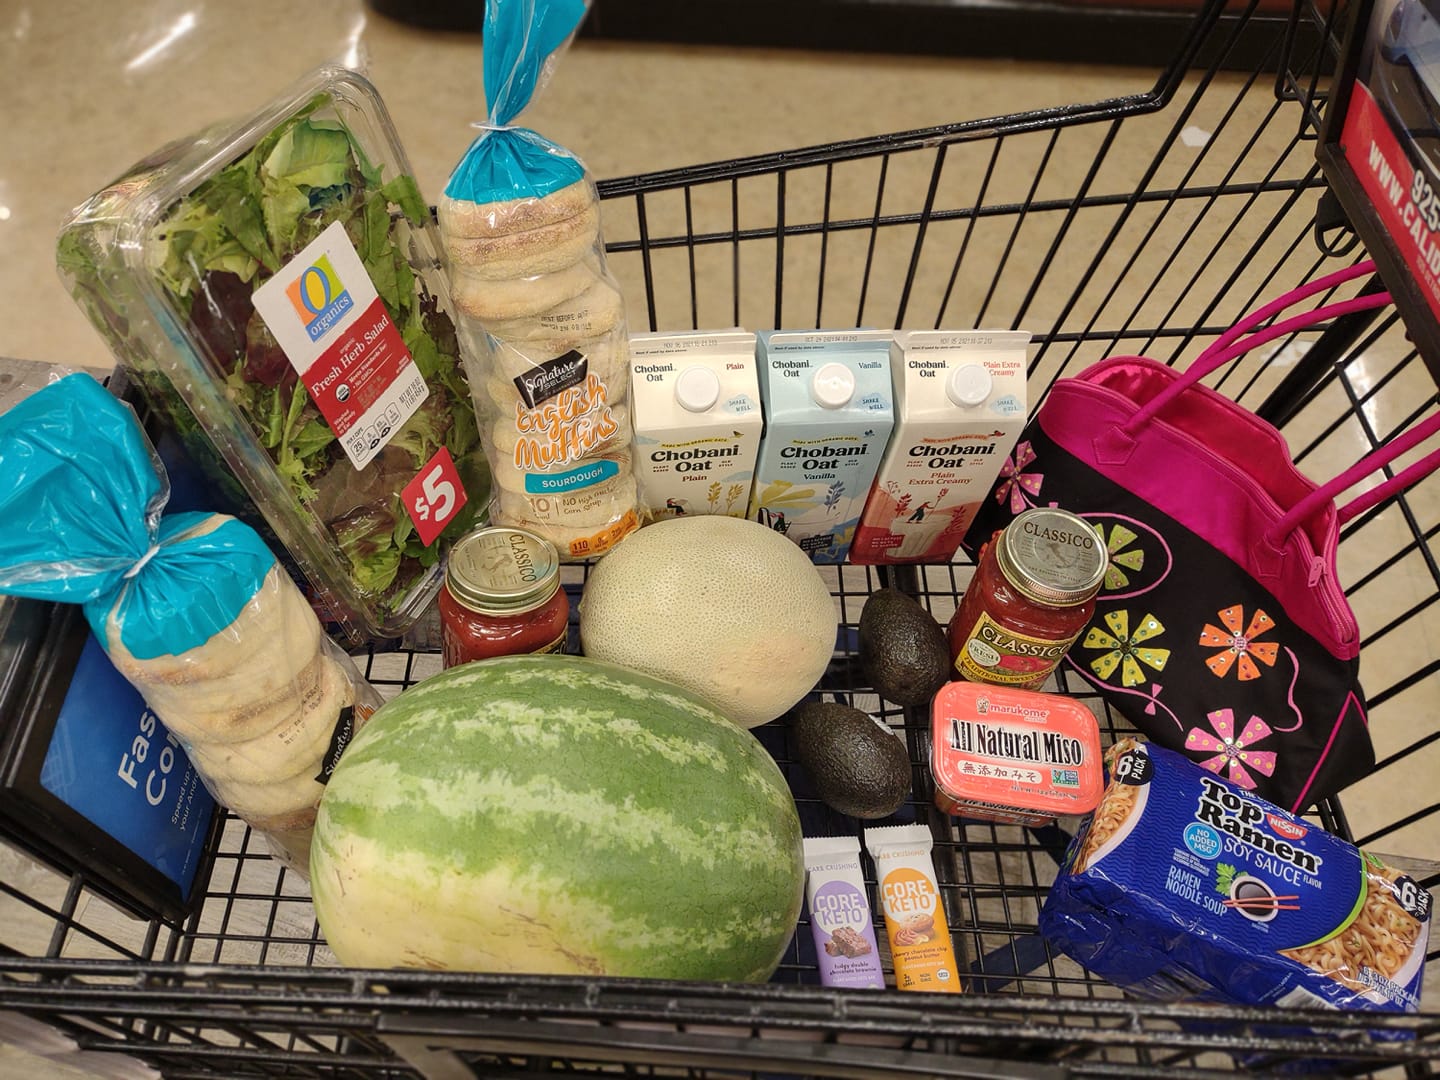 My cart full of vegan groceries, includes watermelon, cantaloupe, Chobani Oatmilk, Core Keto Bars, sourdough English Muffins, Classico pasta sauce, salad pack, soy sauce Top Ramen, avocados